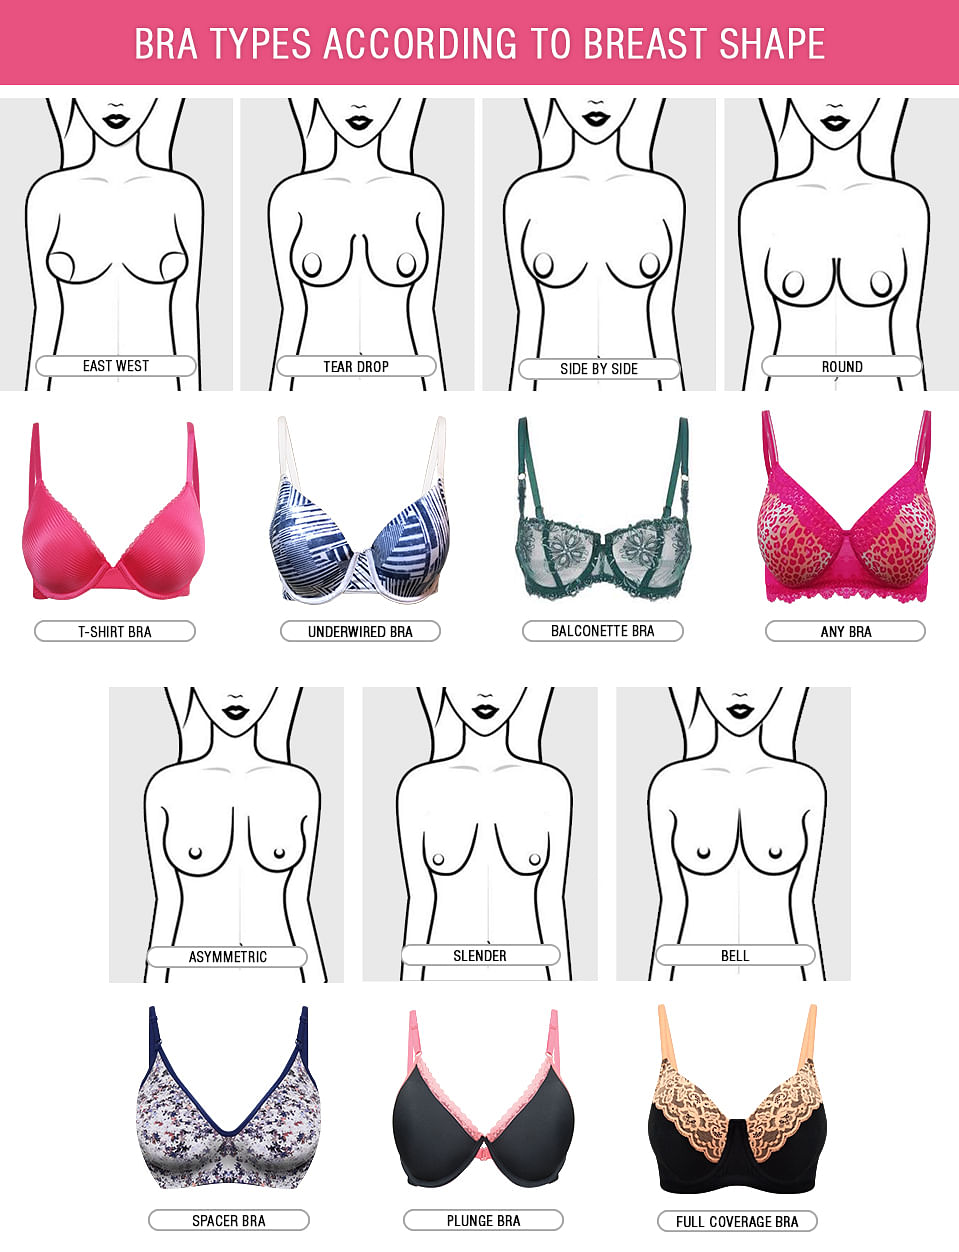 Bra Types According to Breast Shape